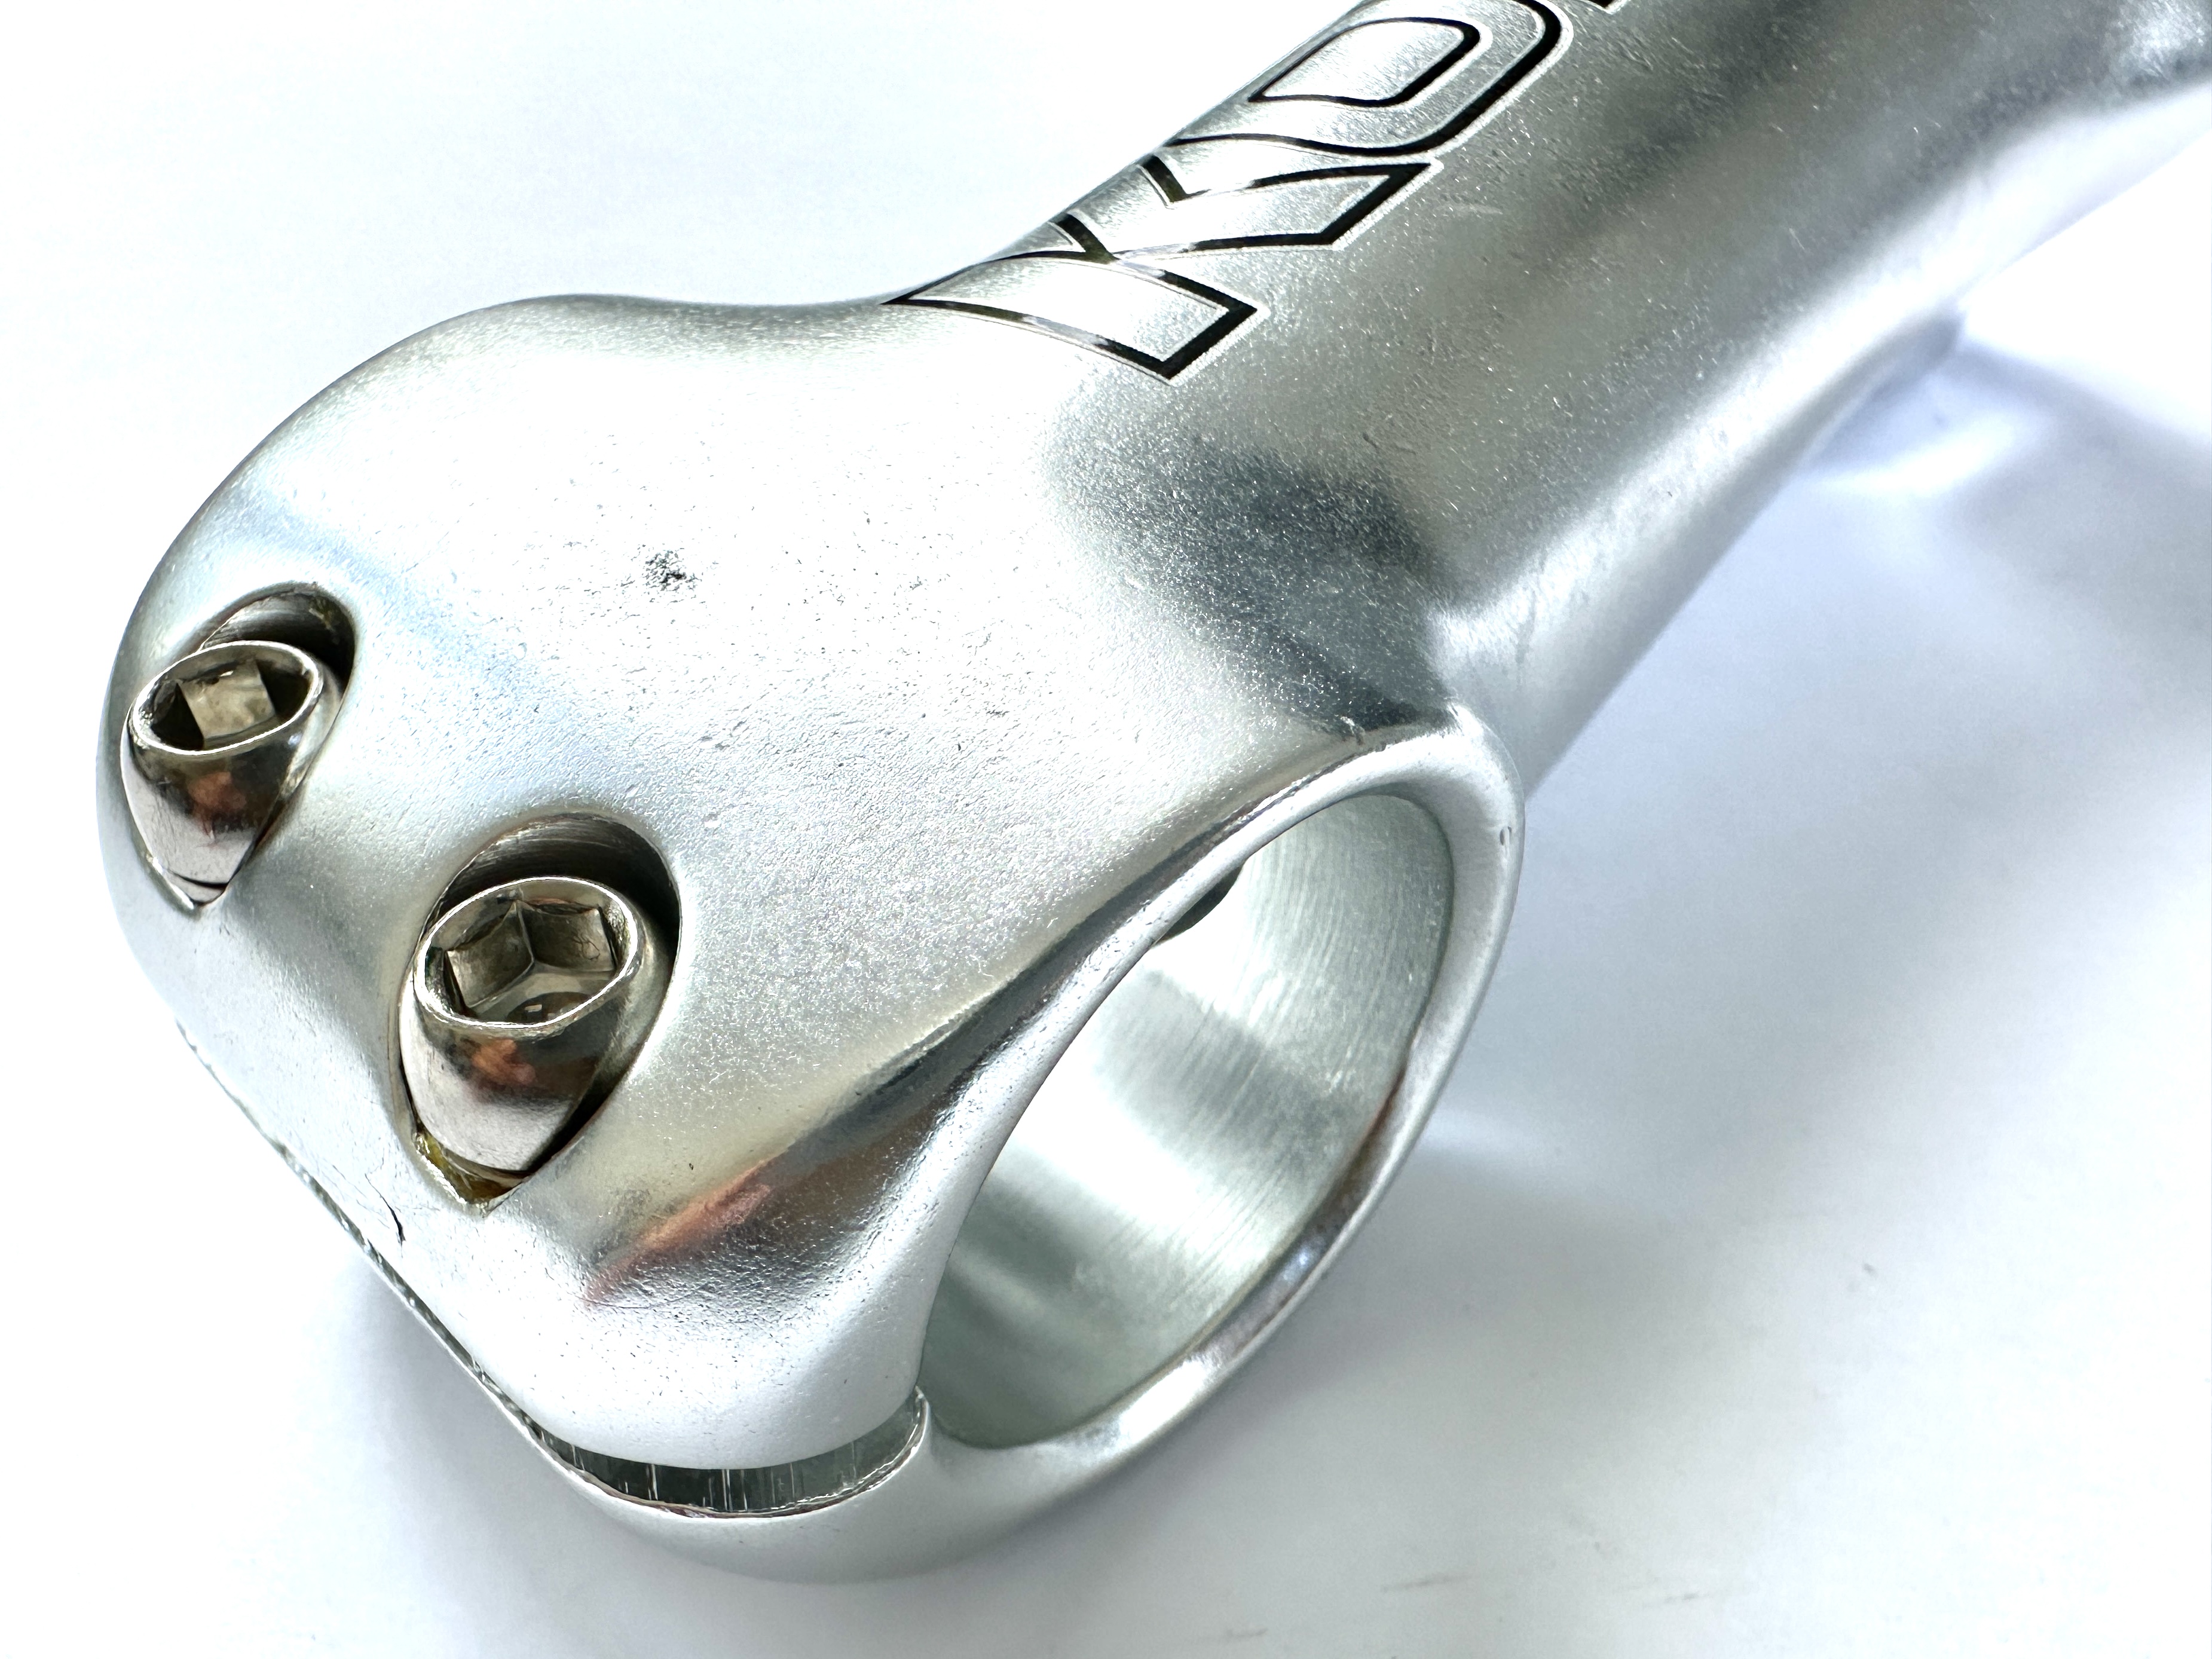 Kore aluminum stem mount: 1 1/8 handlebar mount 1 inch 3-way screw connection